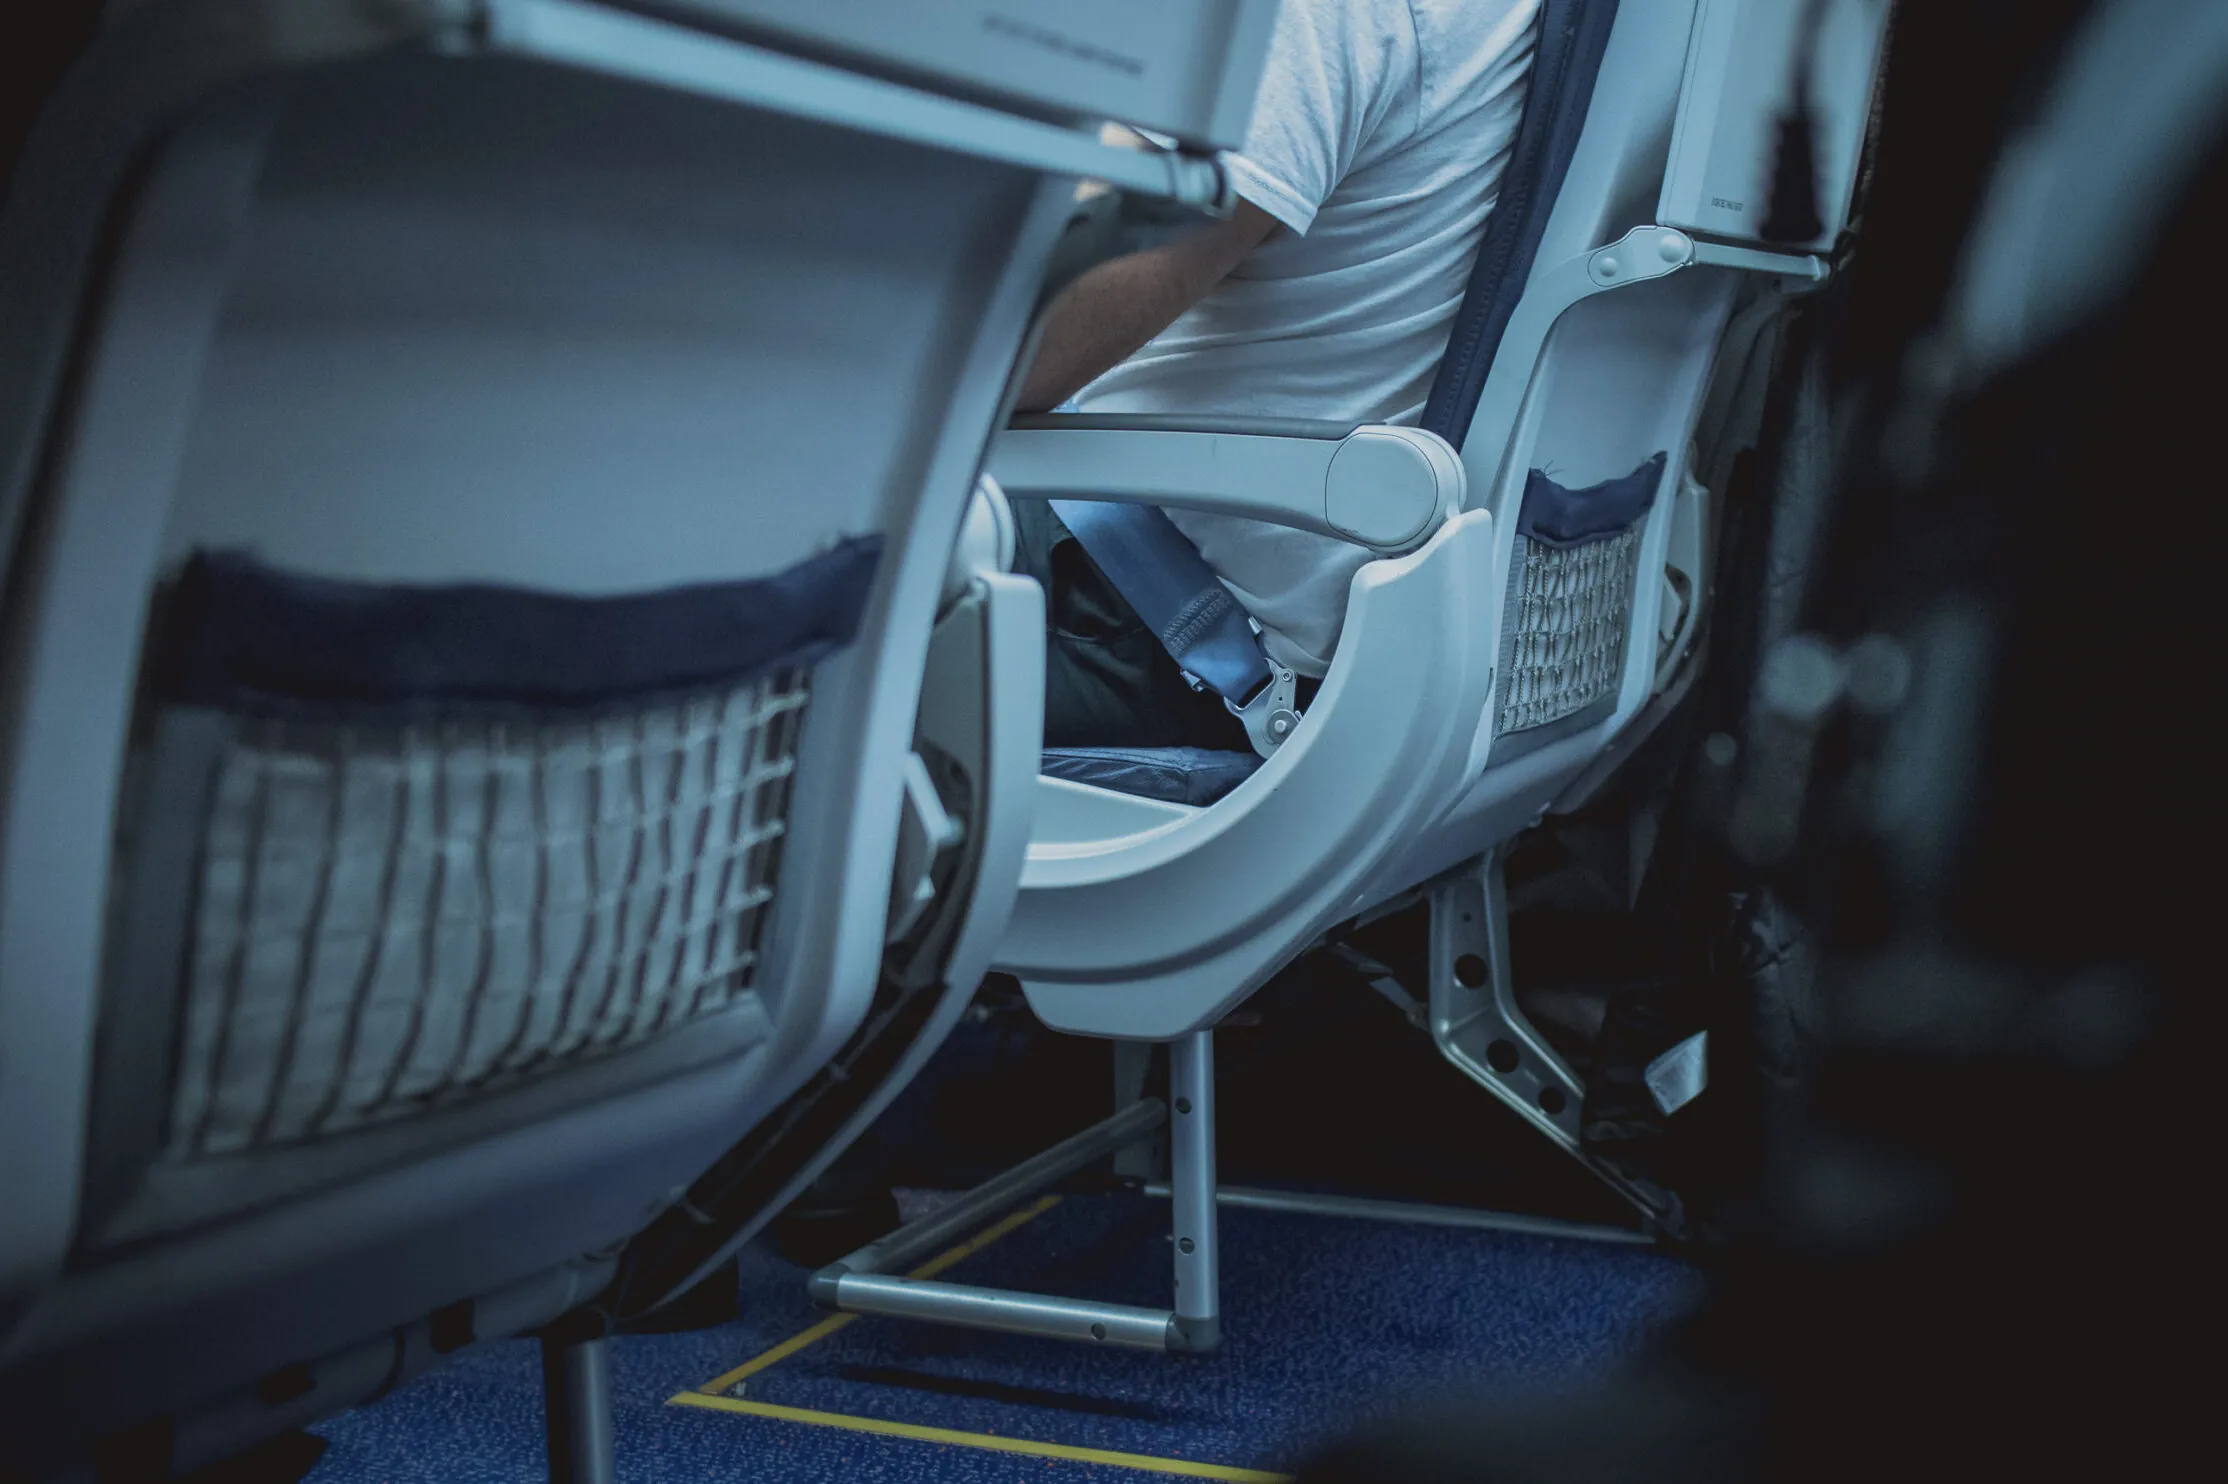 Mesh seatback pockets on airplane seats